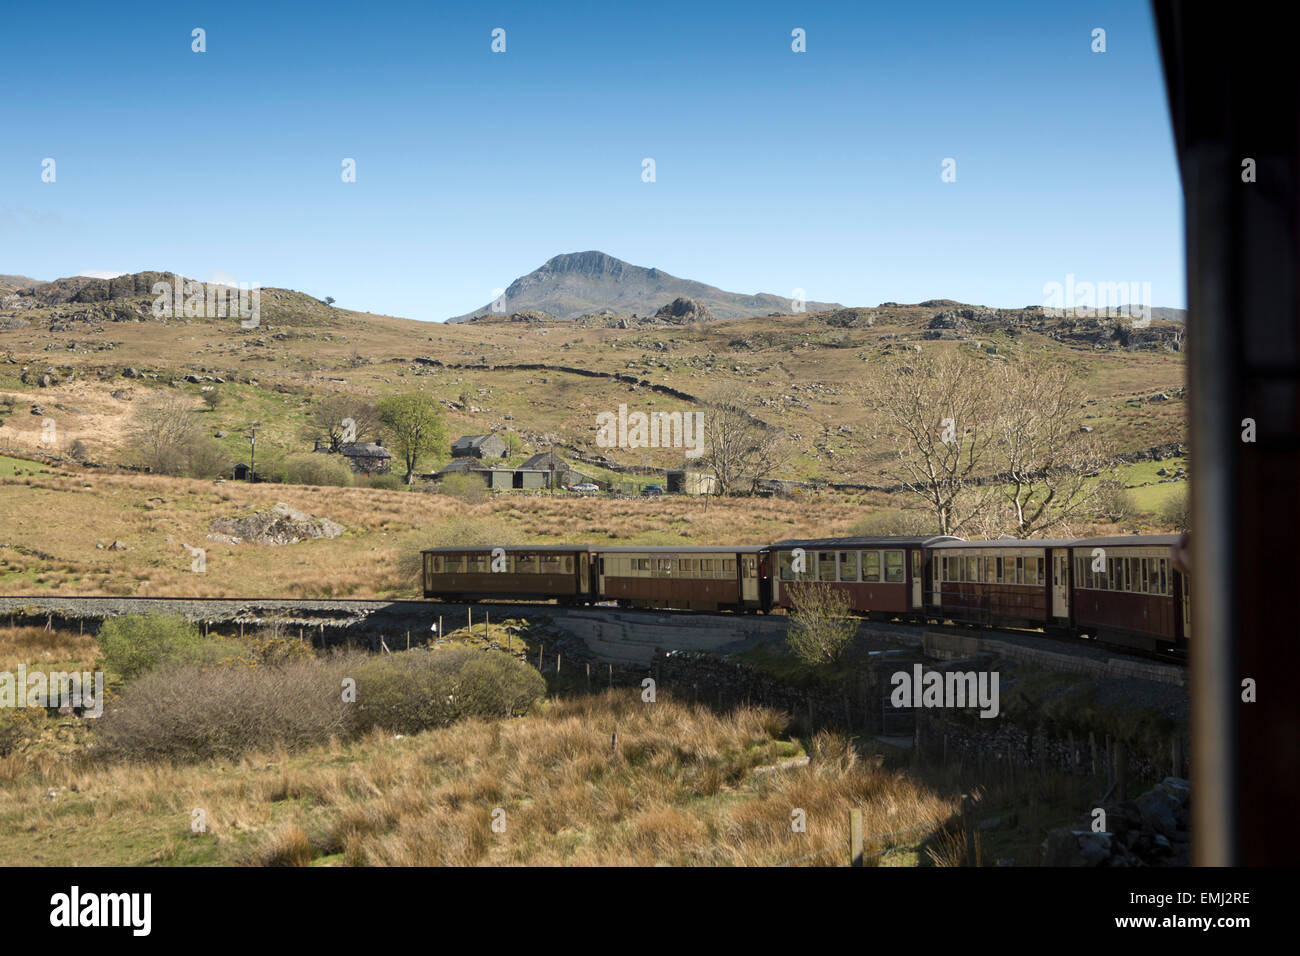 UK, Wales, Gwynedd, Welsh Mountain Railway summit of Snowdon seen from the train Stock Photo